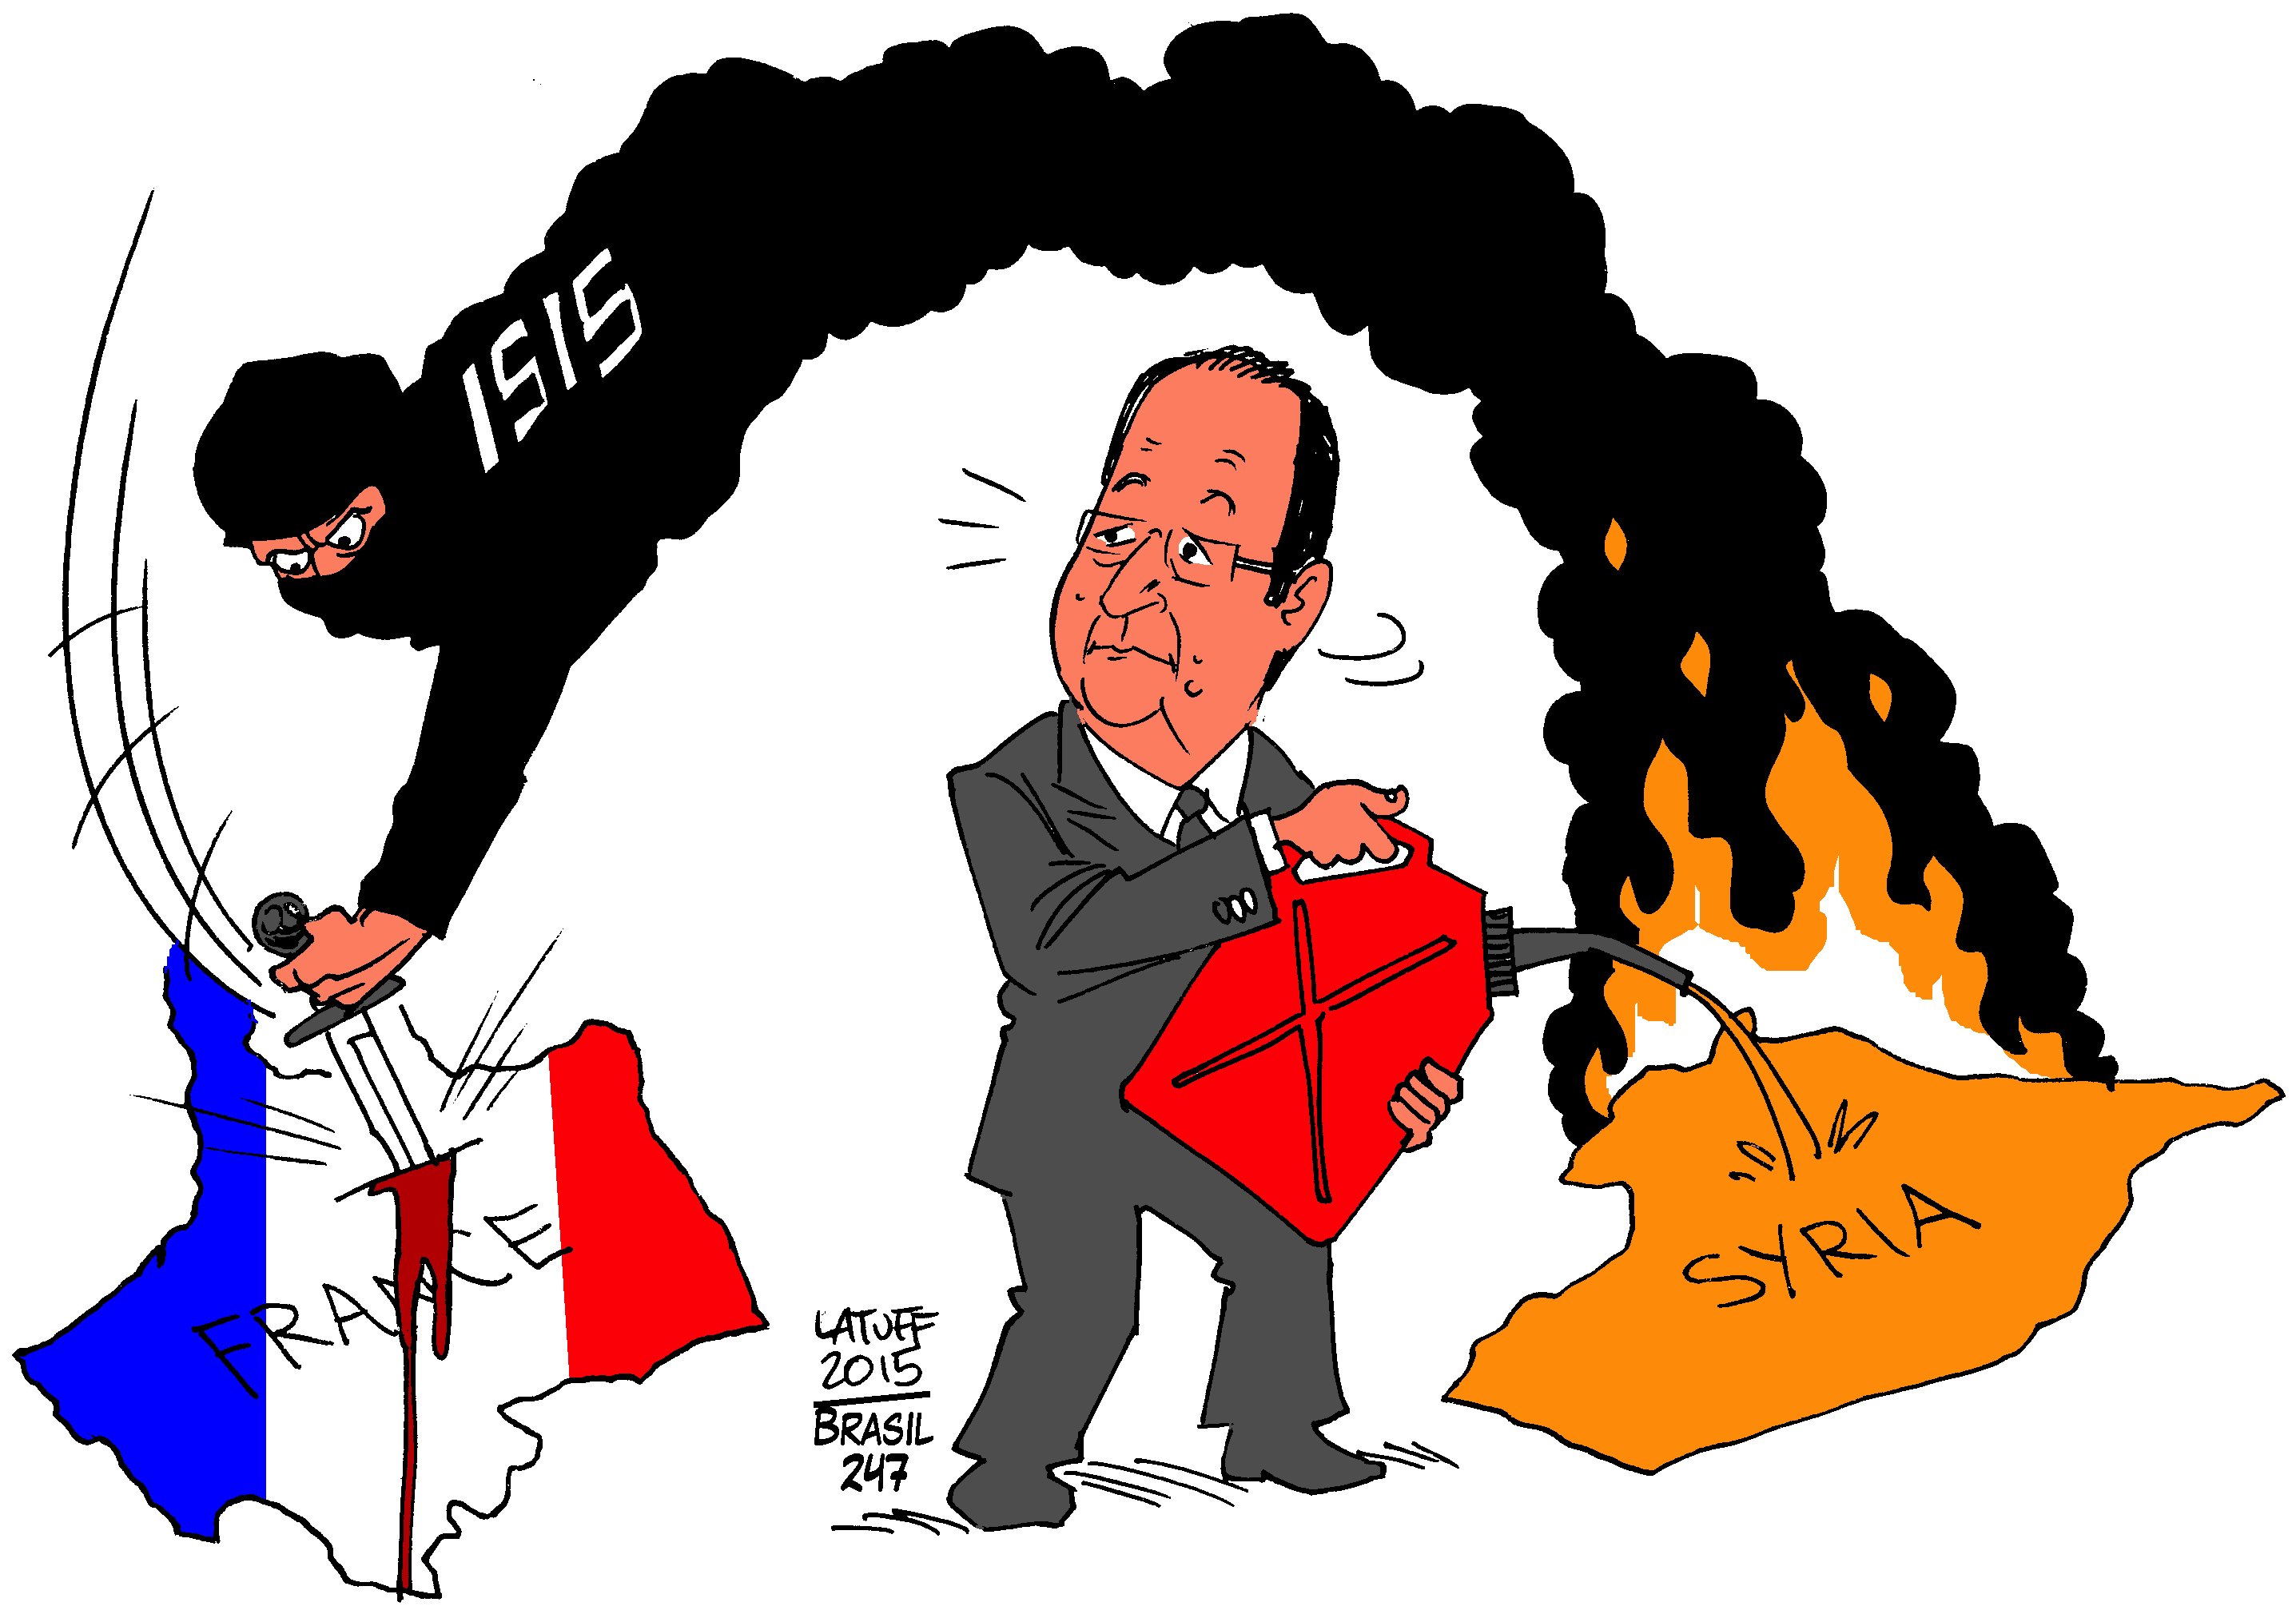 hollande-syria-paris-shootings